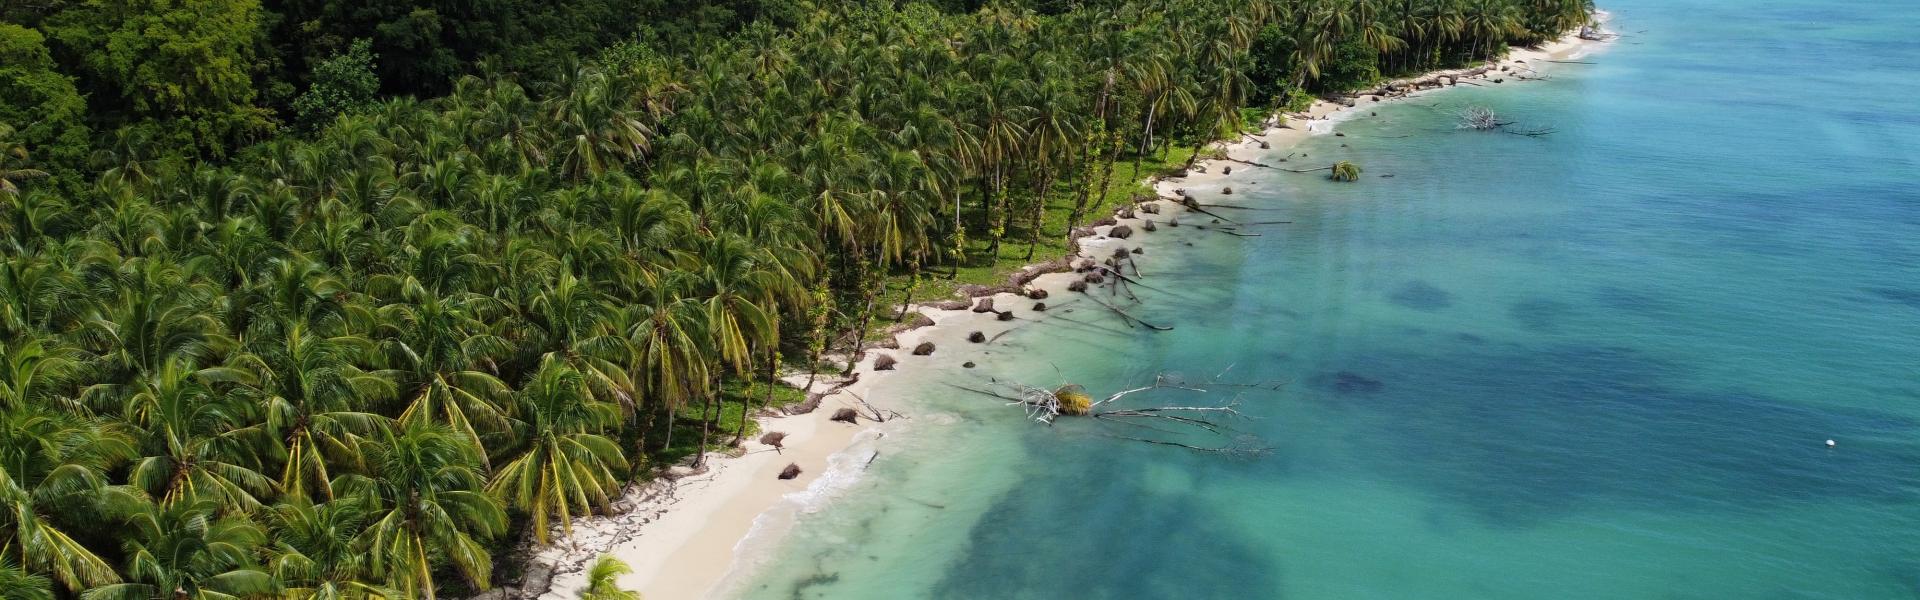 San Blas Islands Vacation Rentals - Wimdu